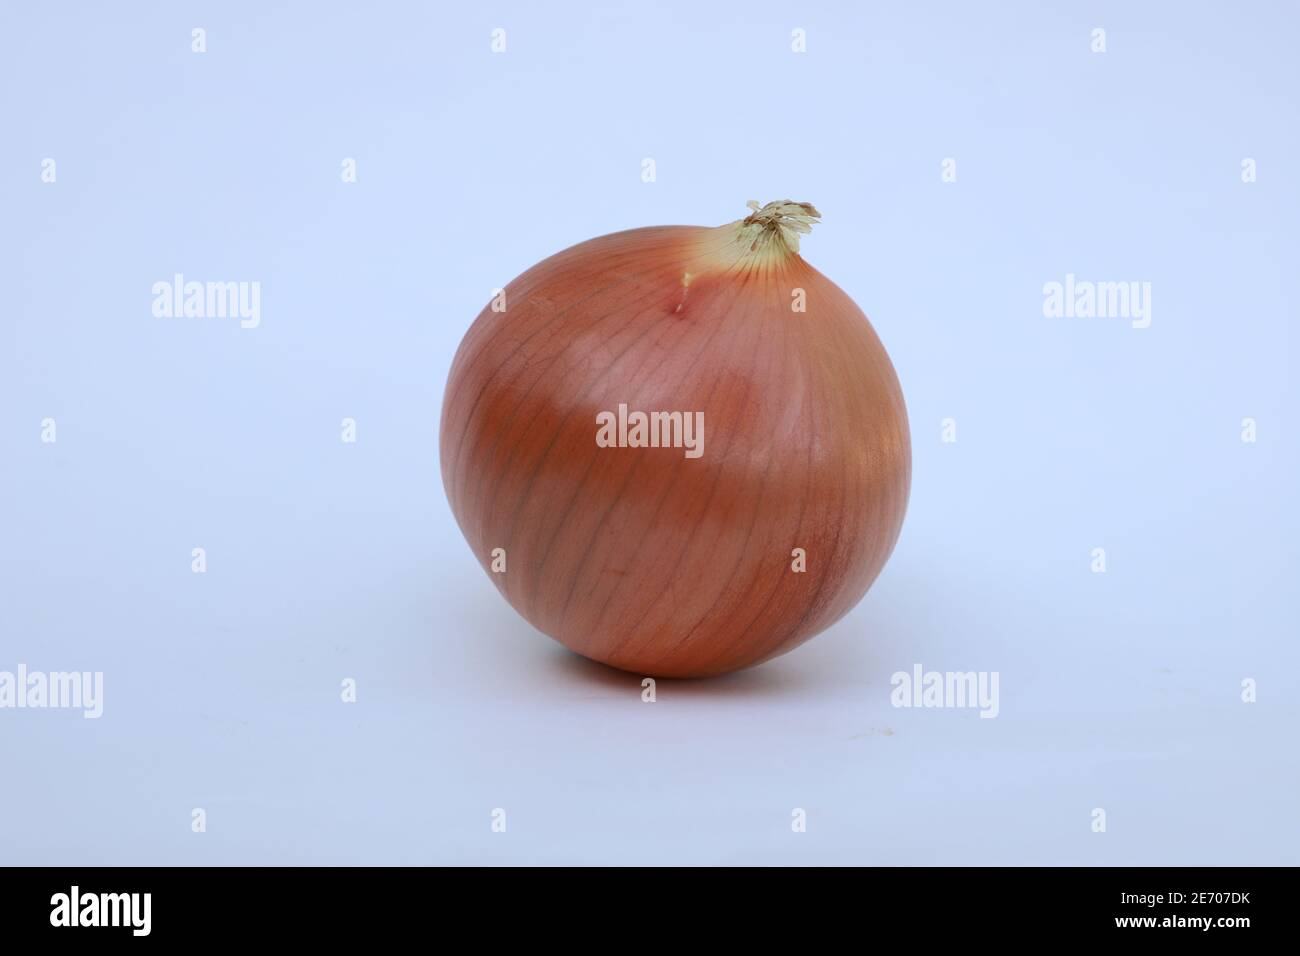 Shiny yellow onion against a white background Stock Photo